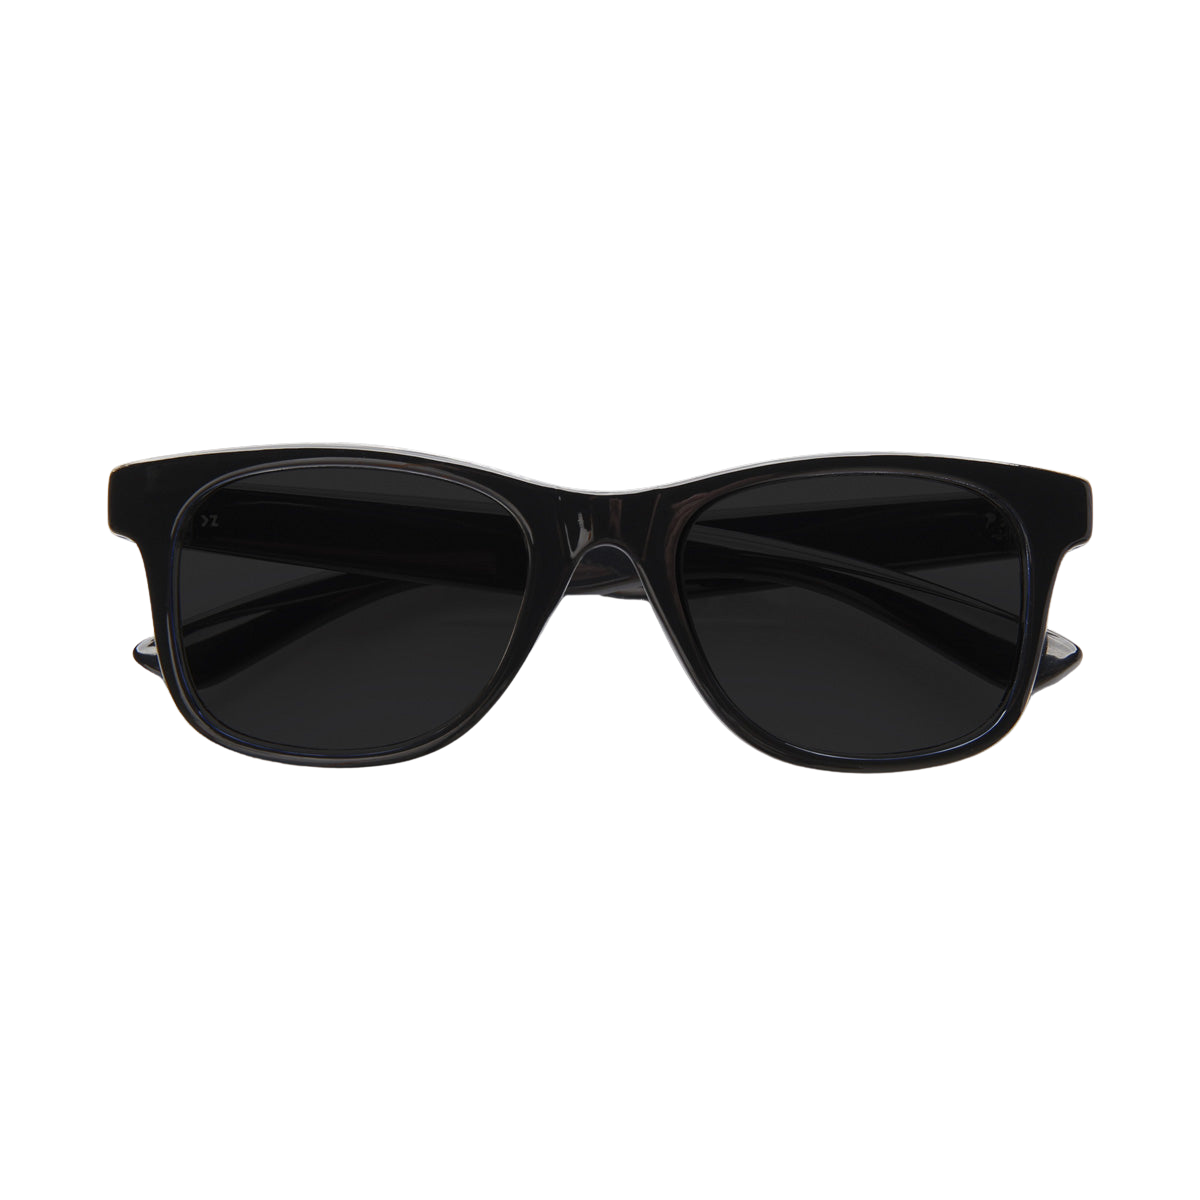 Kidz - Floating Sunglasses